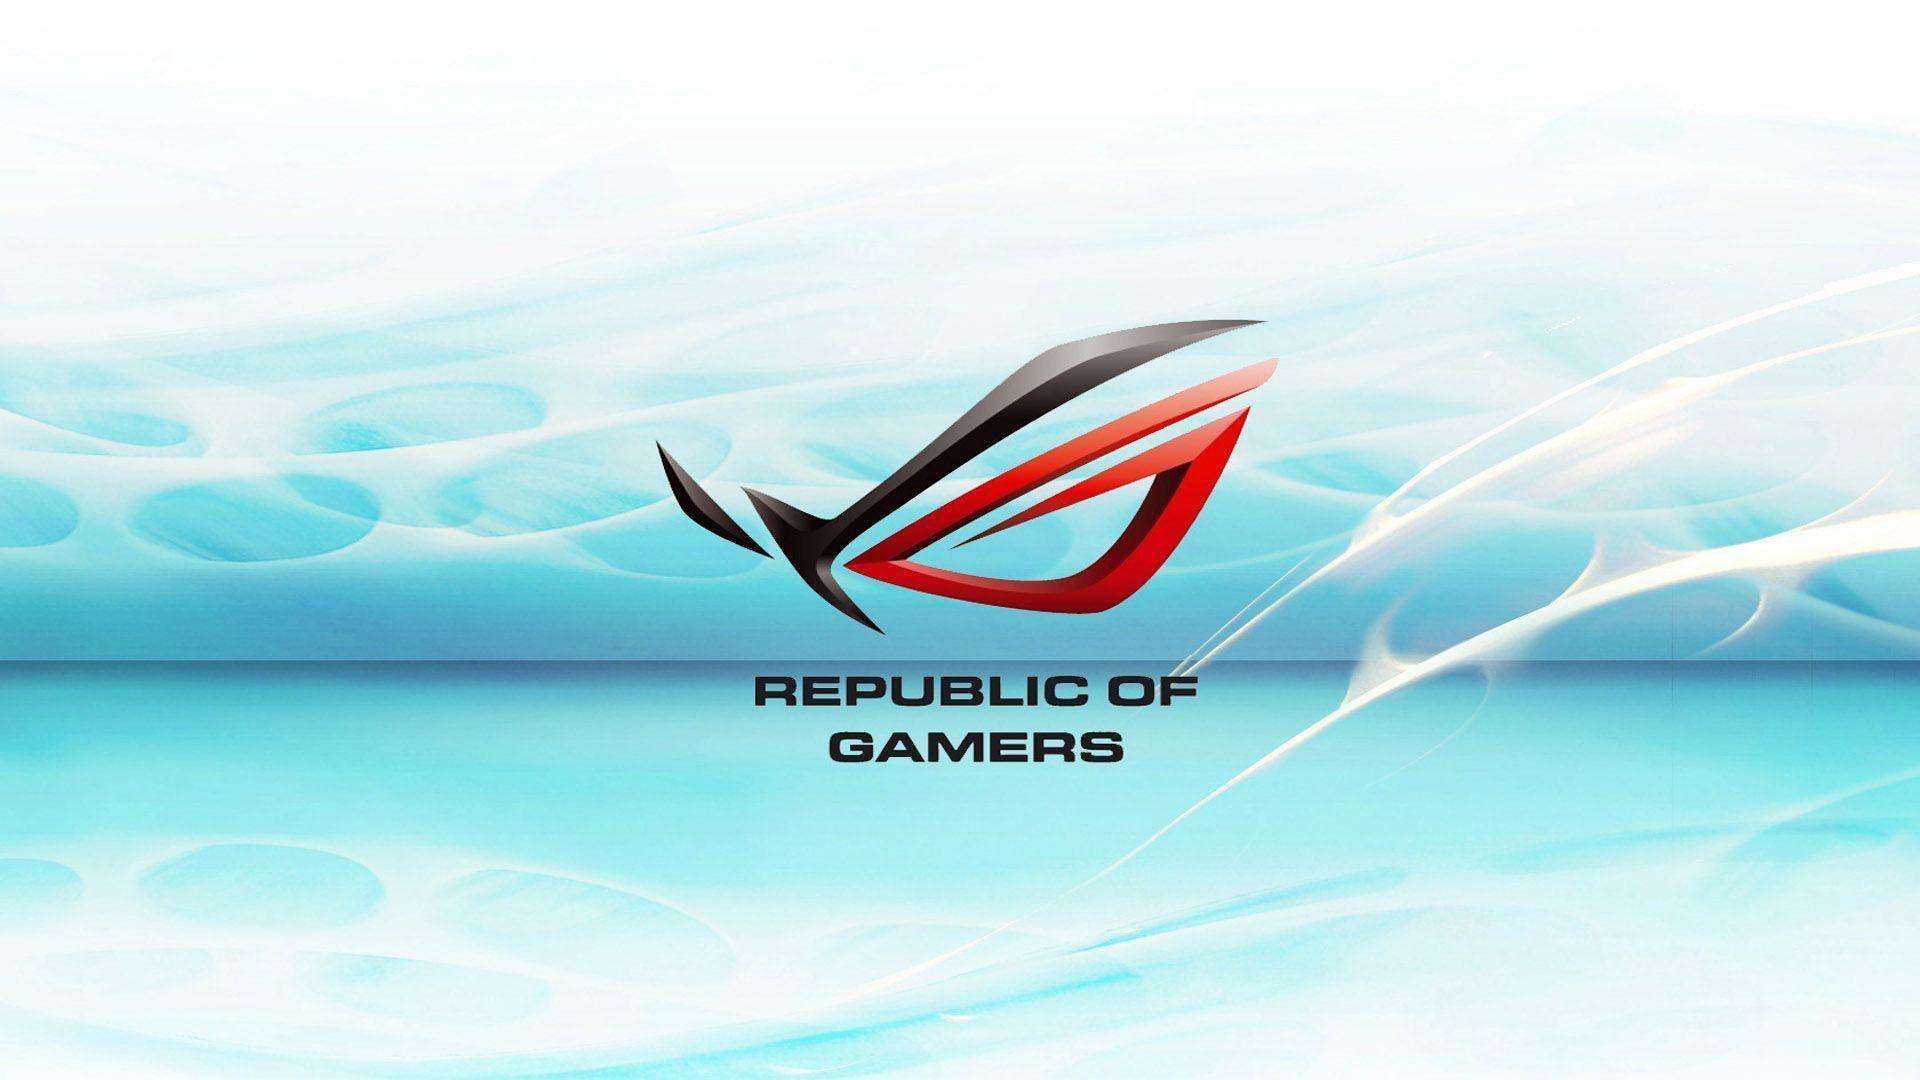 Asus Republic Of Gamers Wallpaper. TanukinoSippo